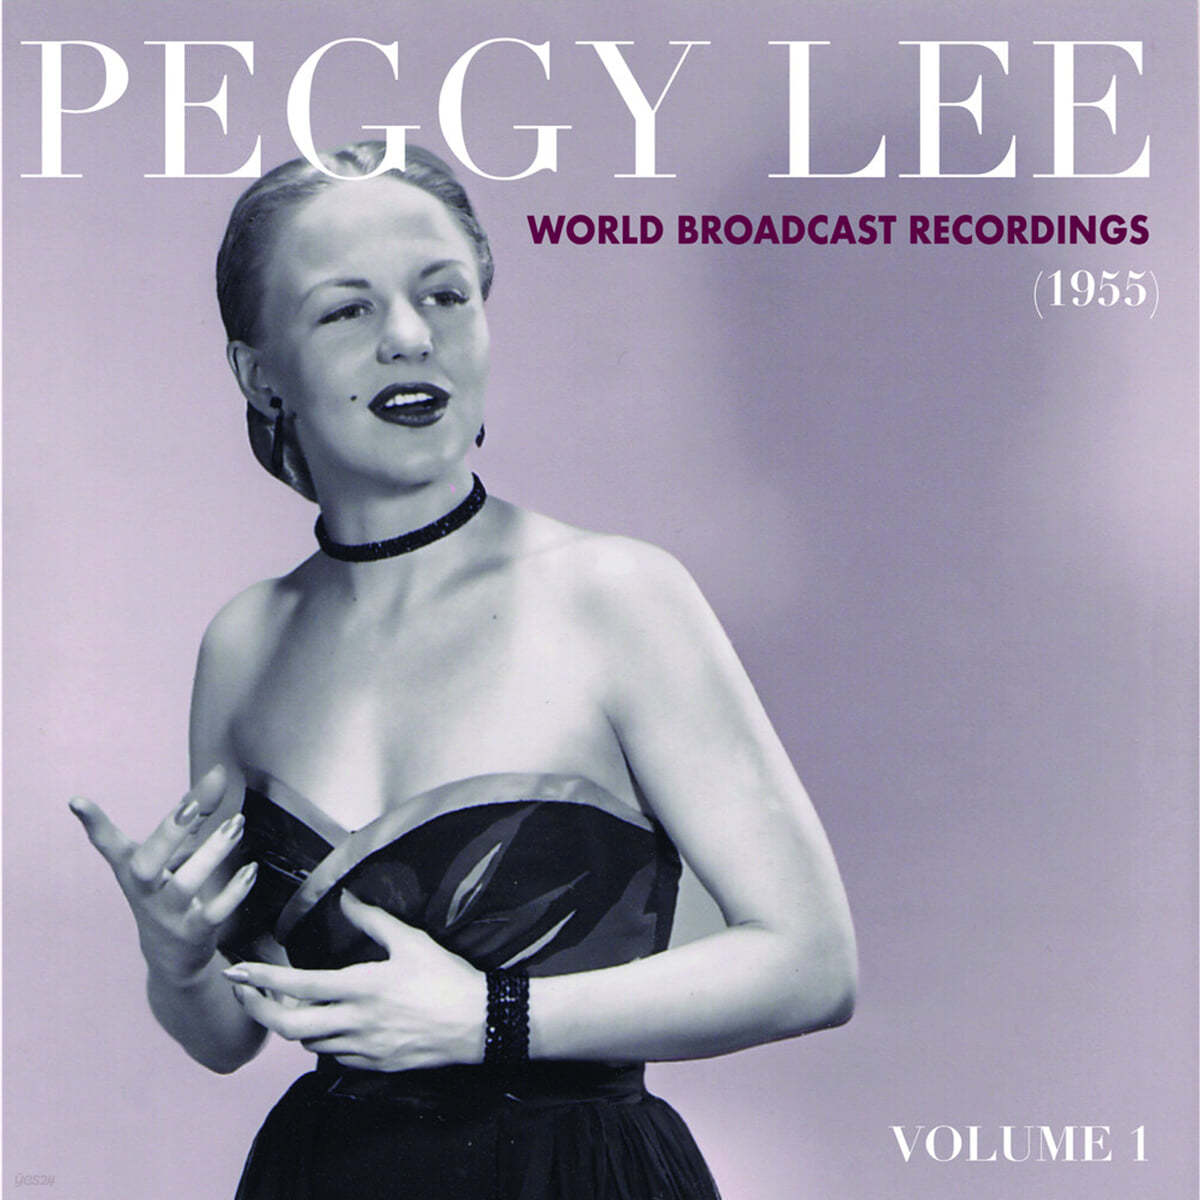 Peggy Lee (페기 리) - World Broadcast Recordings 1955, Vol. 1 [핑크 컬러 LP] 